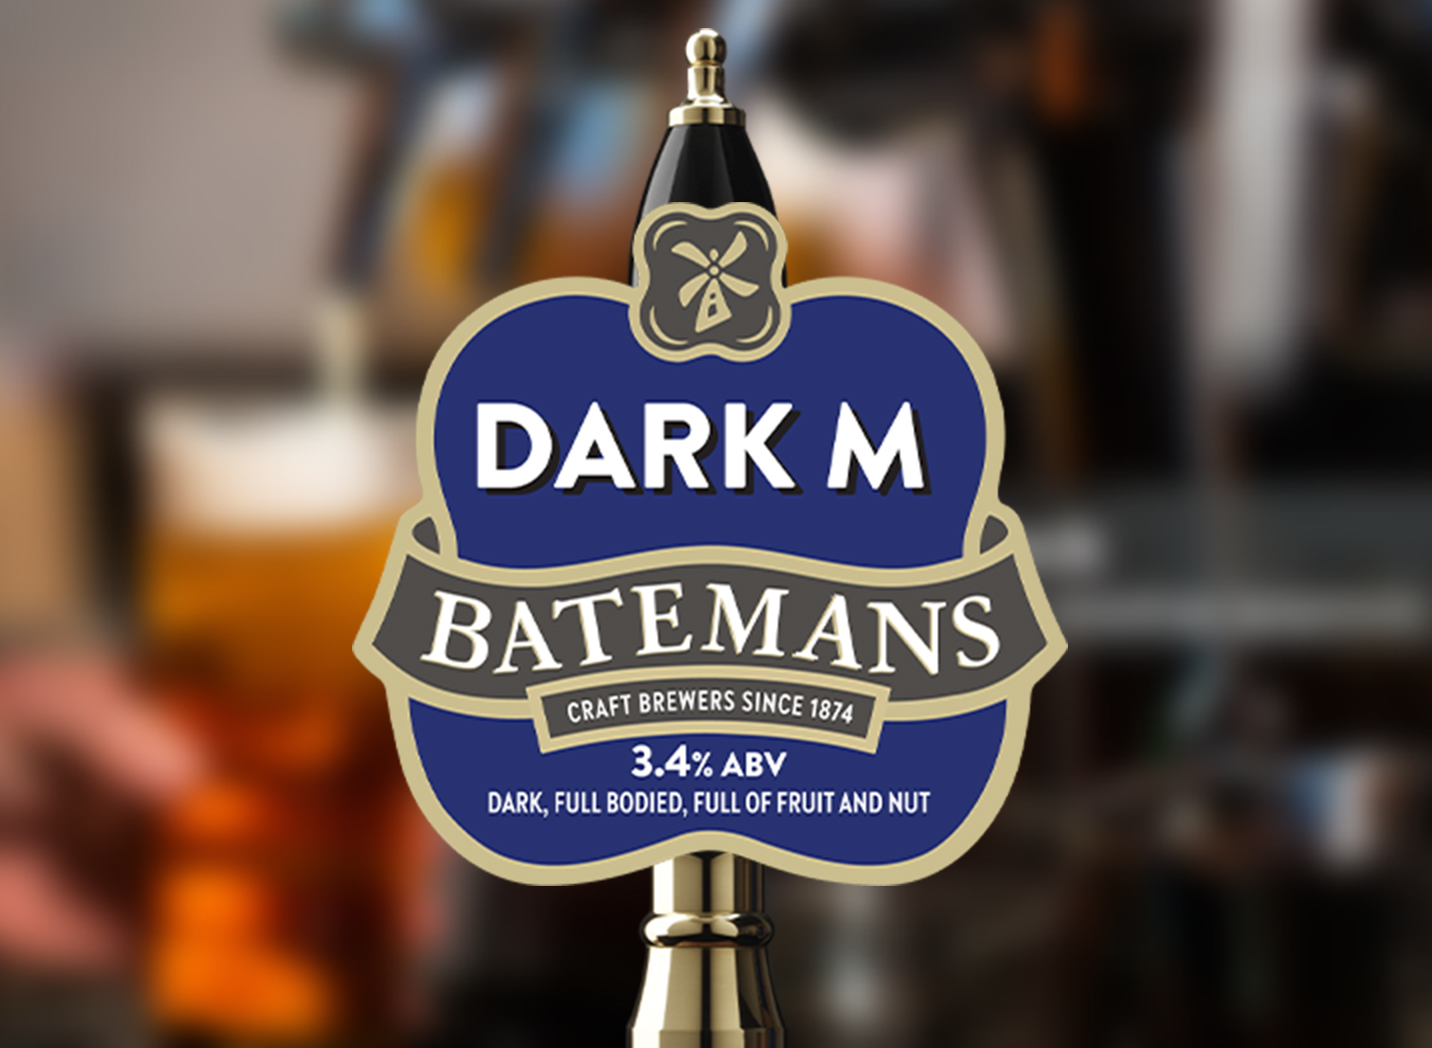 Dark M Batemans Beer